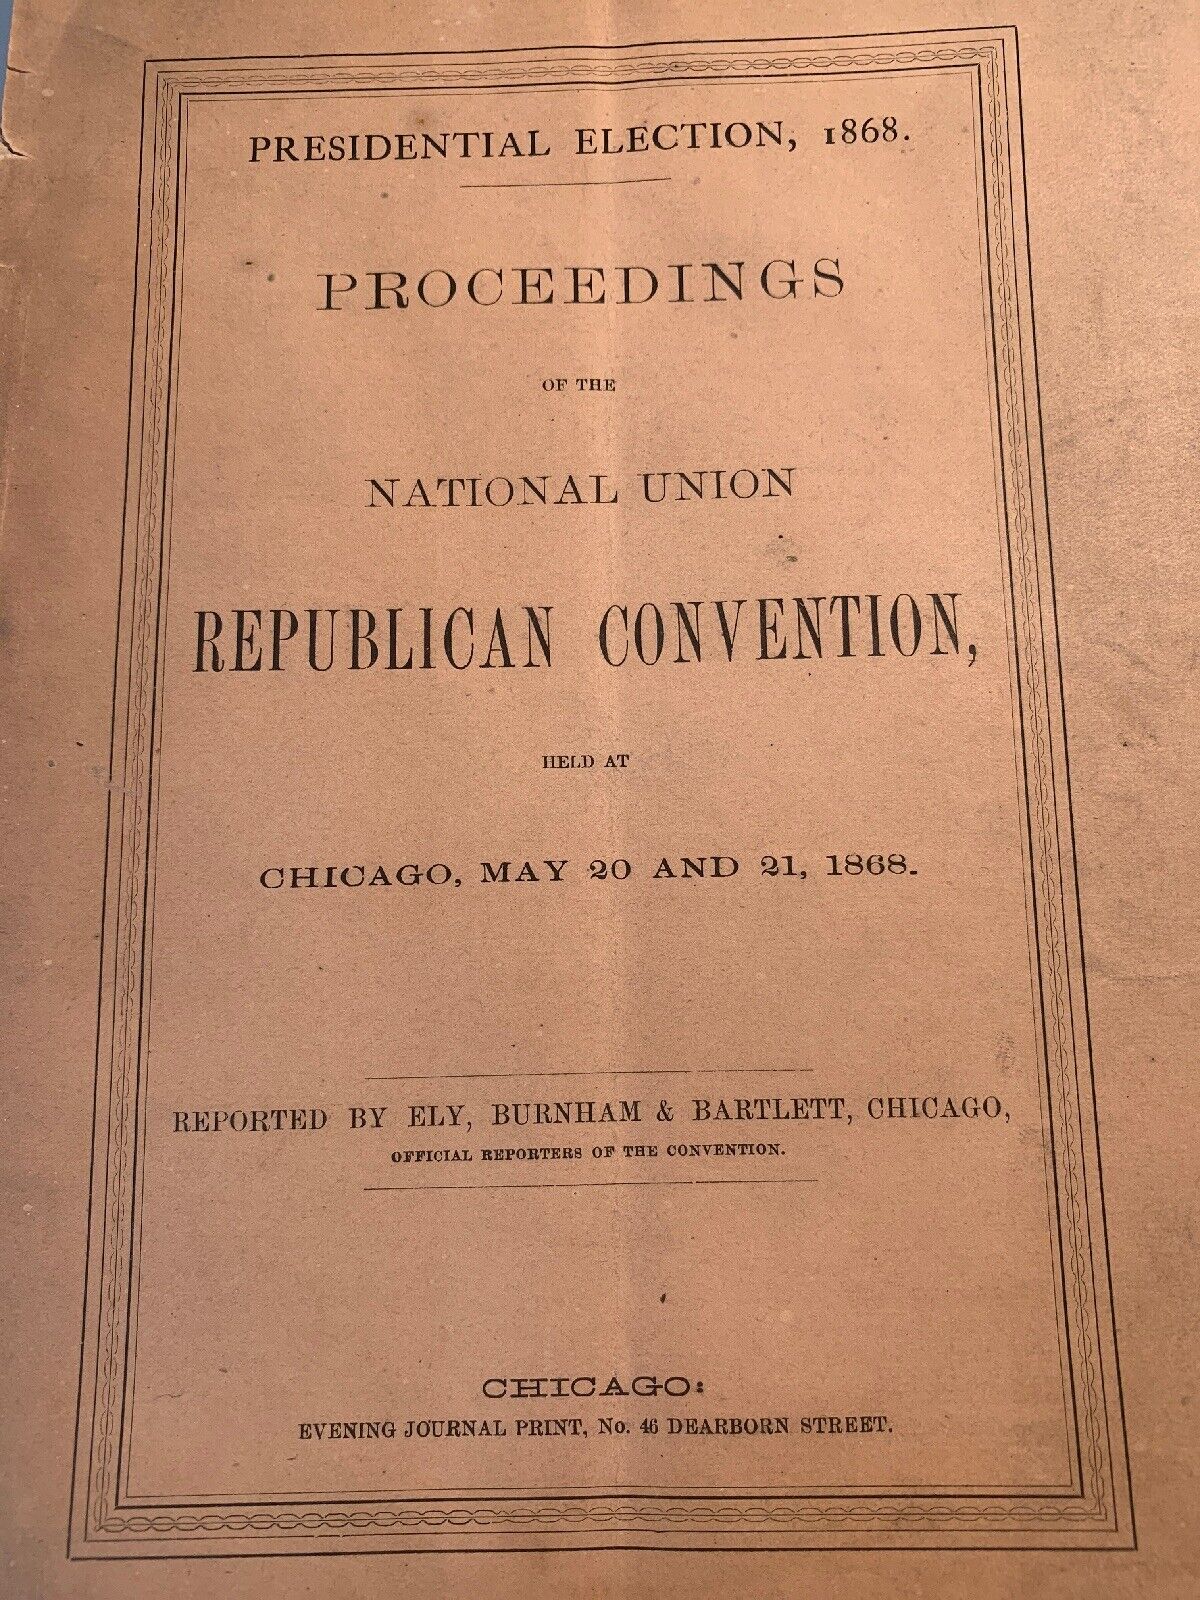 Orig 1868 Presidential Republican Convention Chicago Proceedings Program HEET en genereus